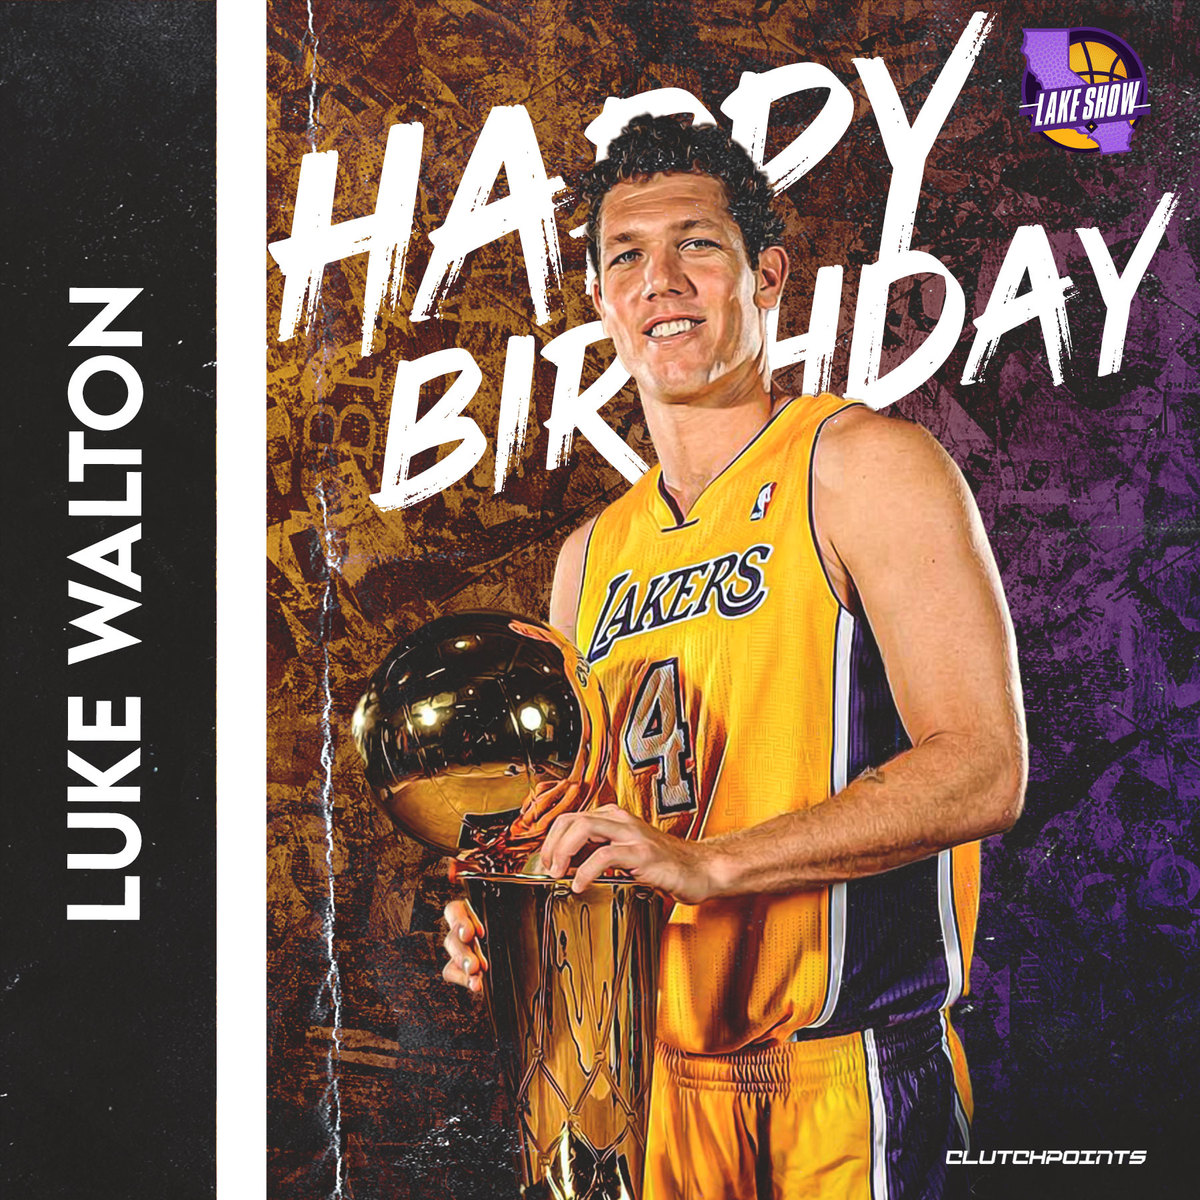 Joing LakeShow as we greet the 3x NBA Champion, Luke Walton, a happy 42nd birthday! 